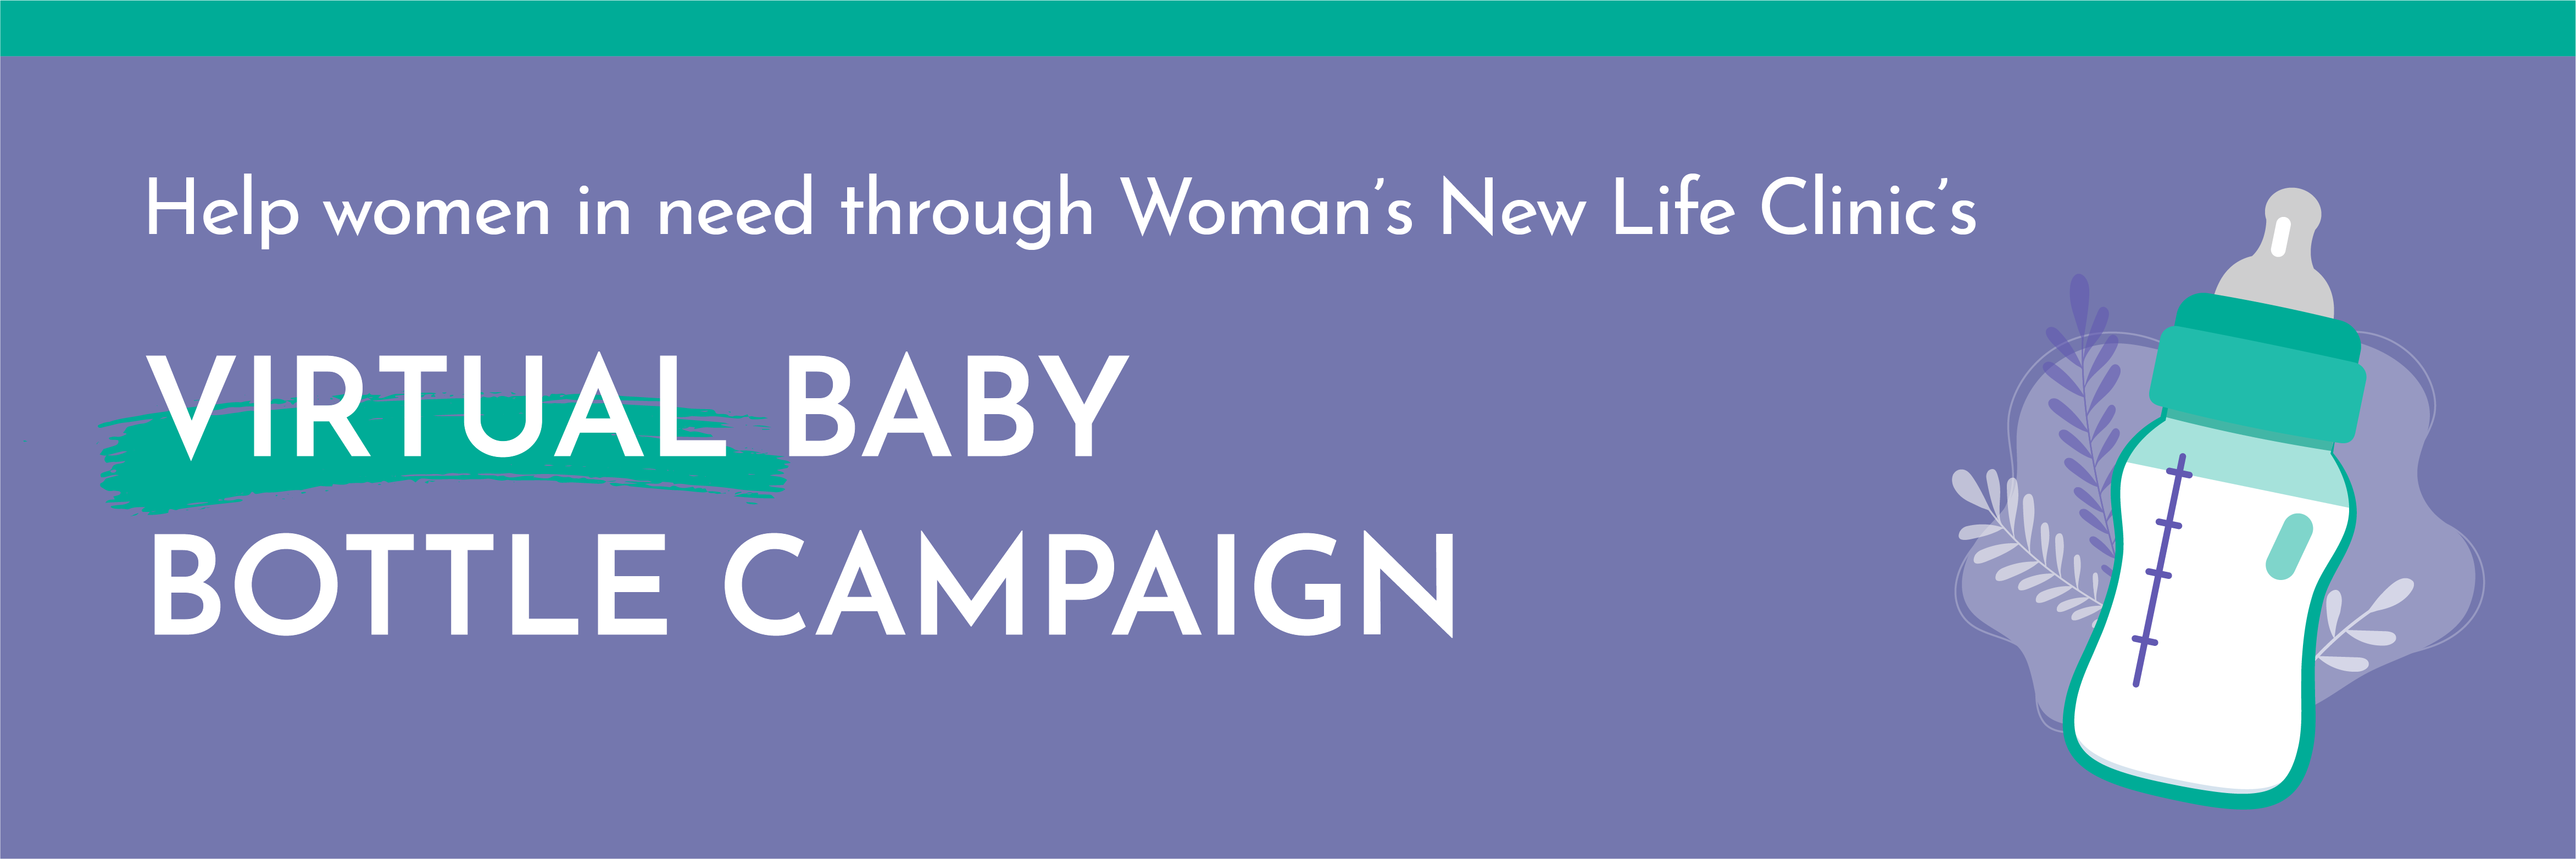 Baby-Bottle-Campaign-Header